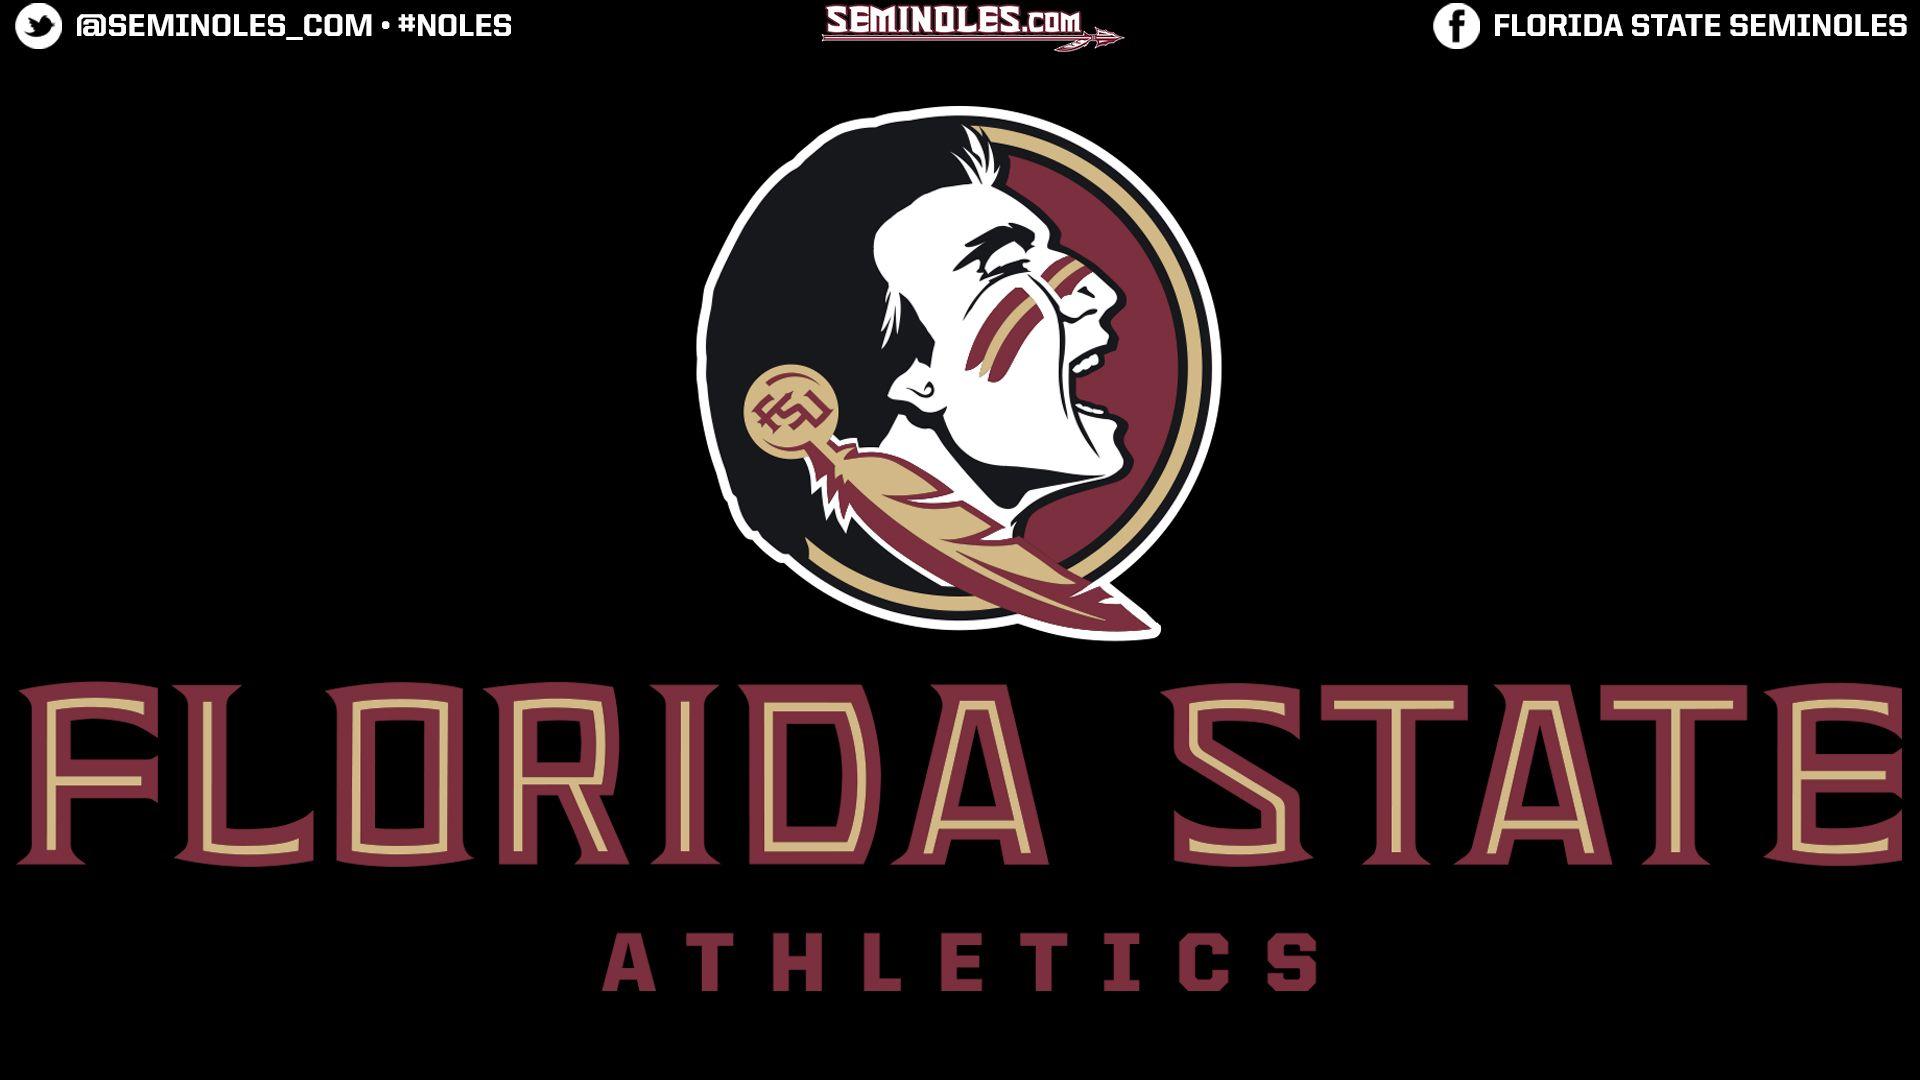 Florida State Seminoles Football Team Logo - Seminoles.com Desktop Wallpapers